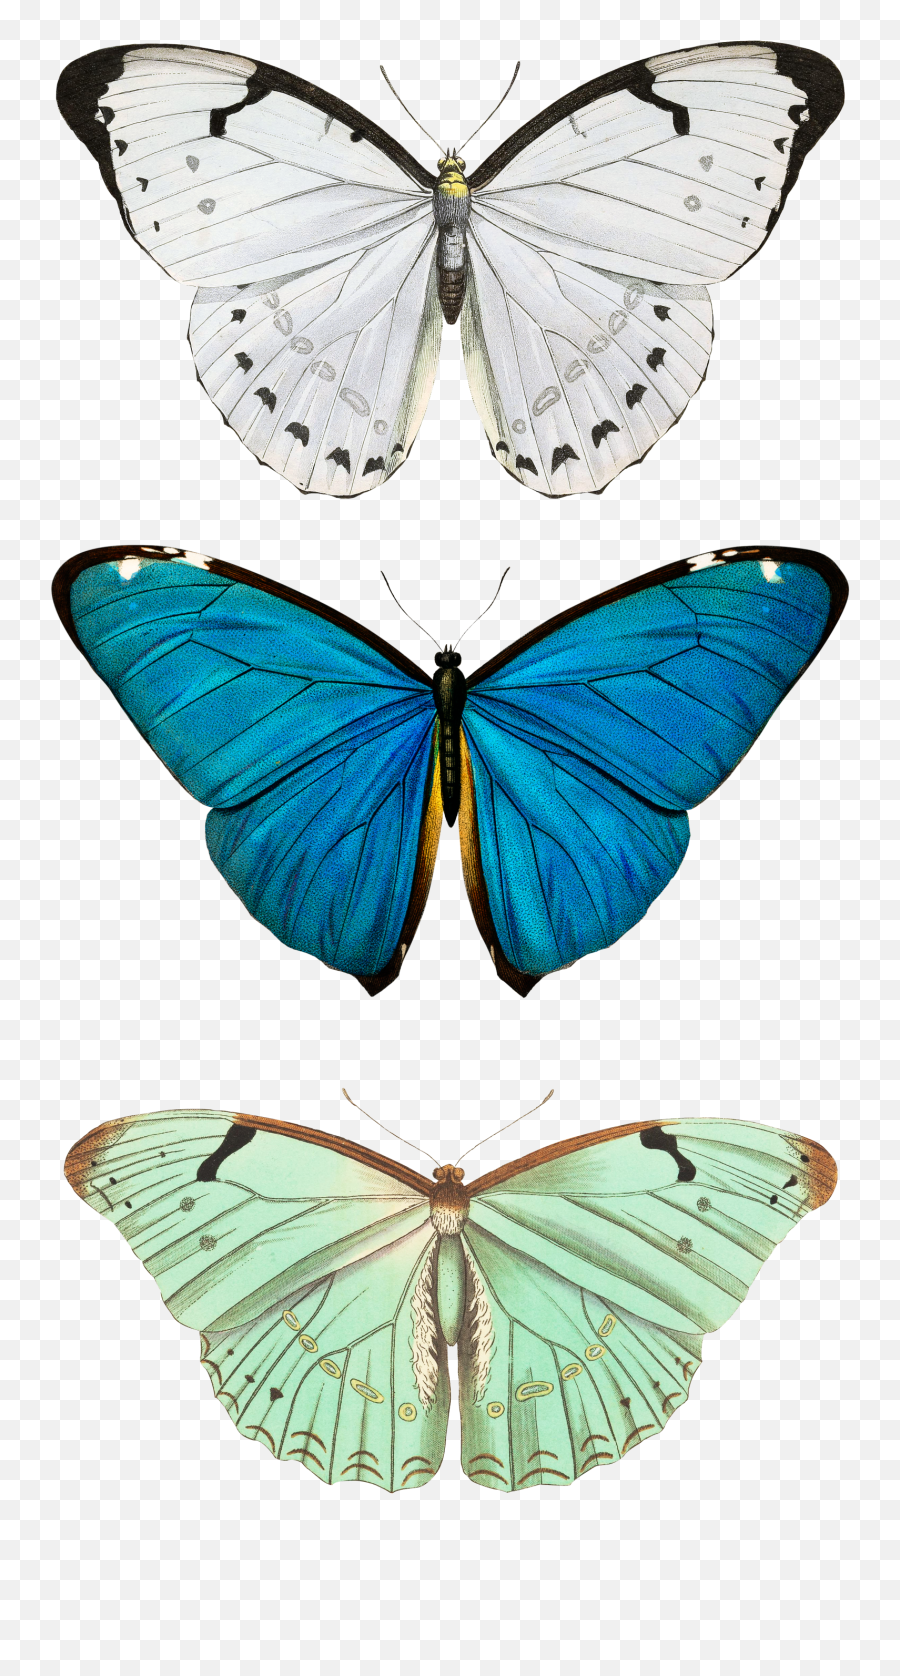 Blue Butterfly Wallpaper Iphone X - Butterfly Illustration Emoji,Butterfly Emoji Iphone